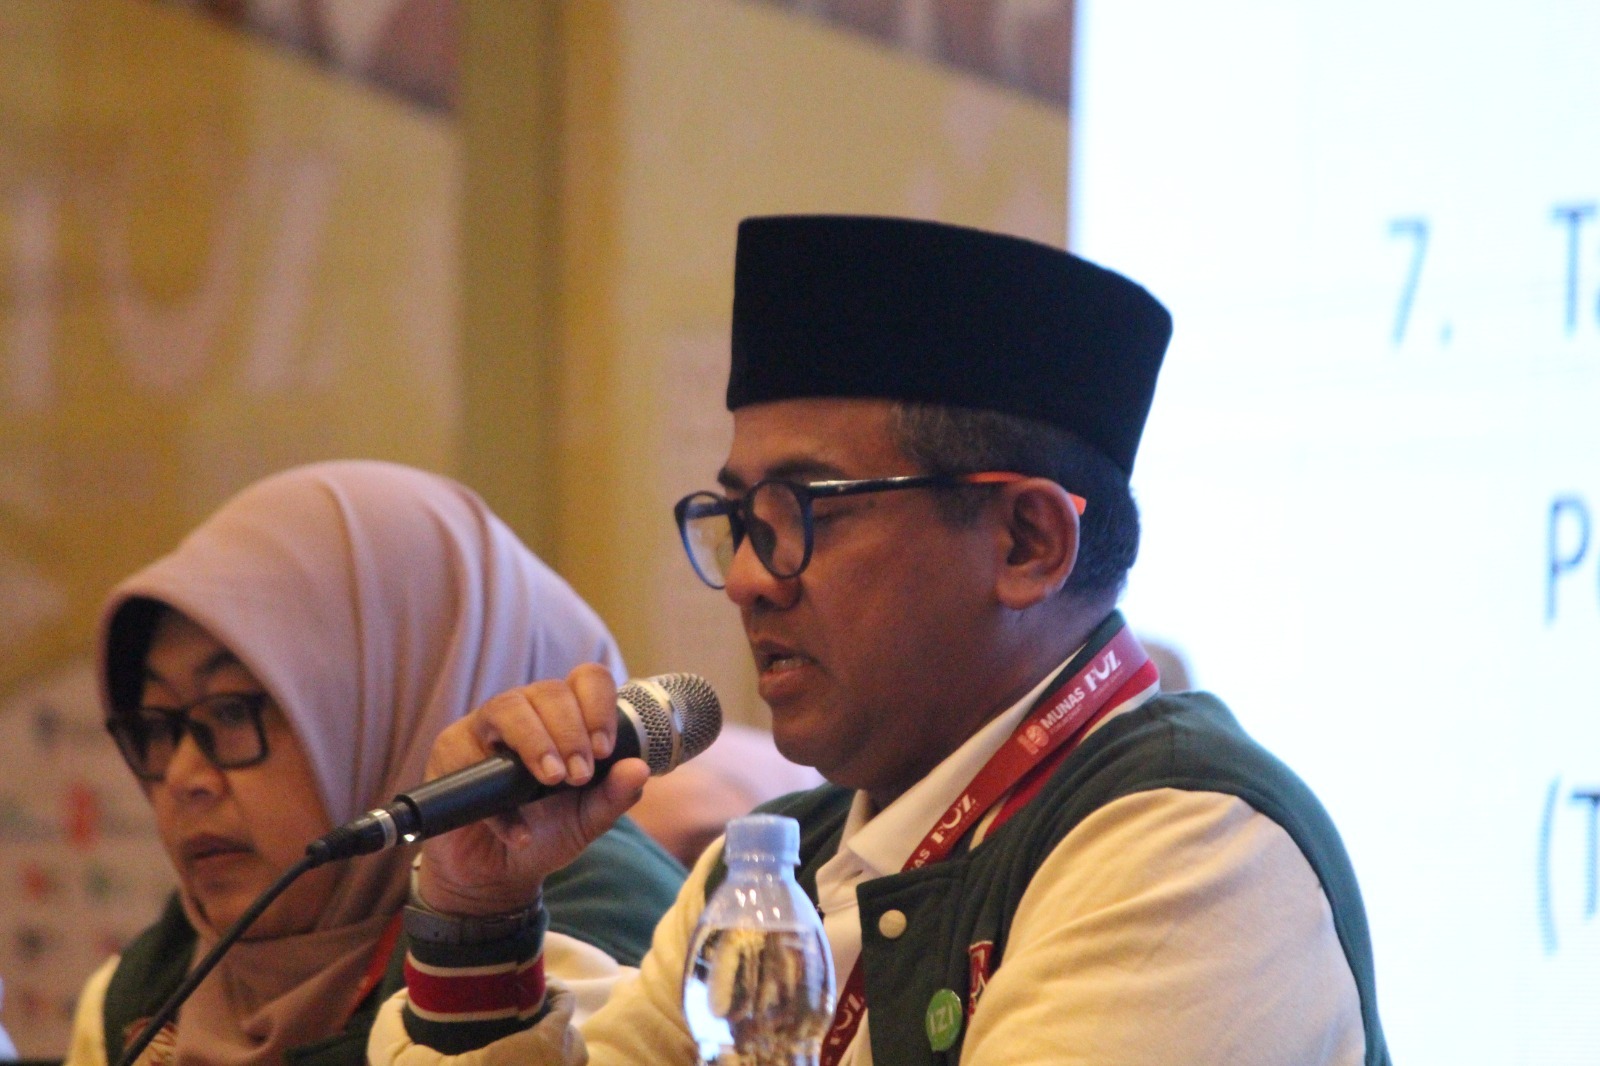 Harmonisasi Elemen Gerakan Zakat Indonesia, Menyongsong Indonesia Emas 2045